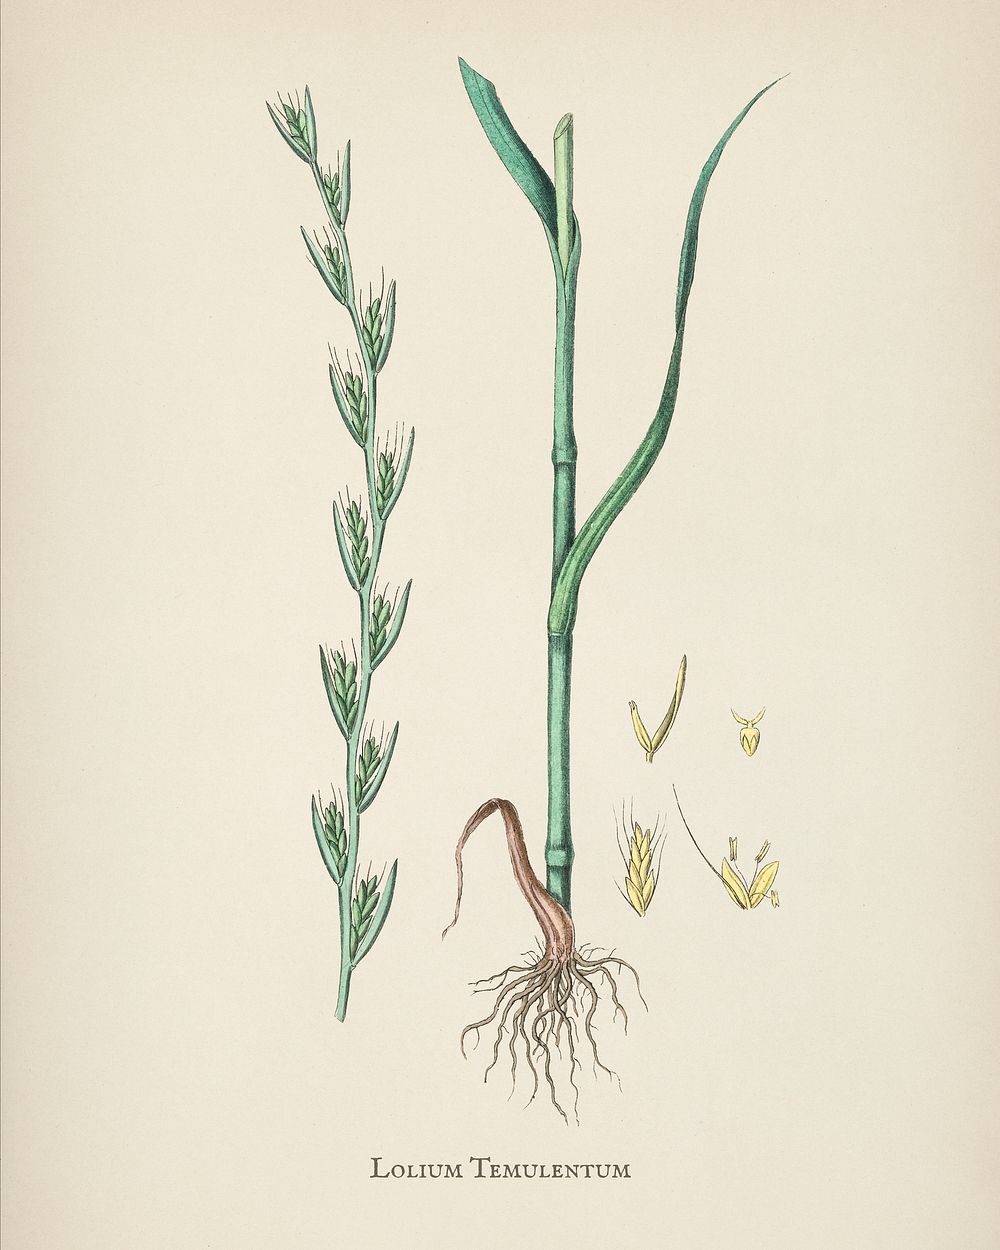 Darnel (Lolium temulentum) illustration from Medical Botany (1836) by John Stephenson and James Morss Churchill.